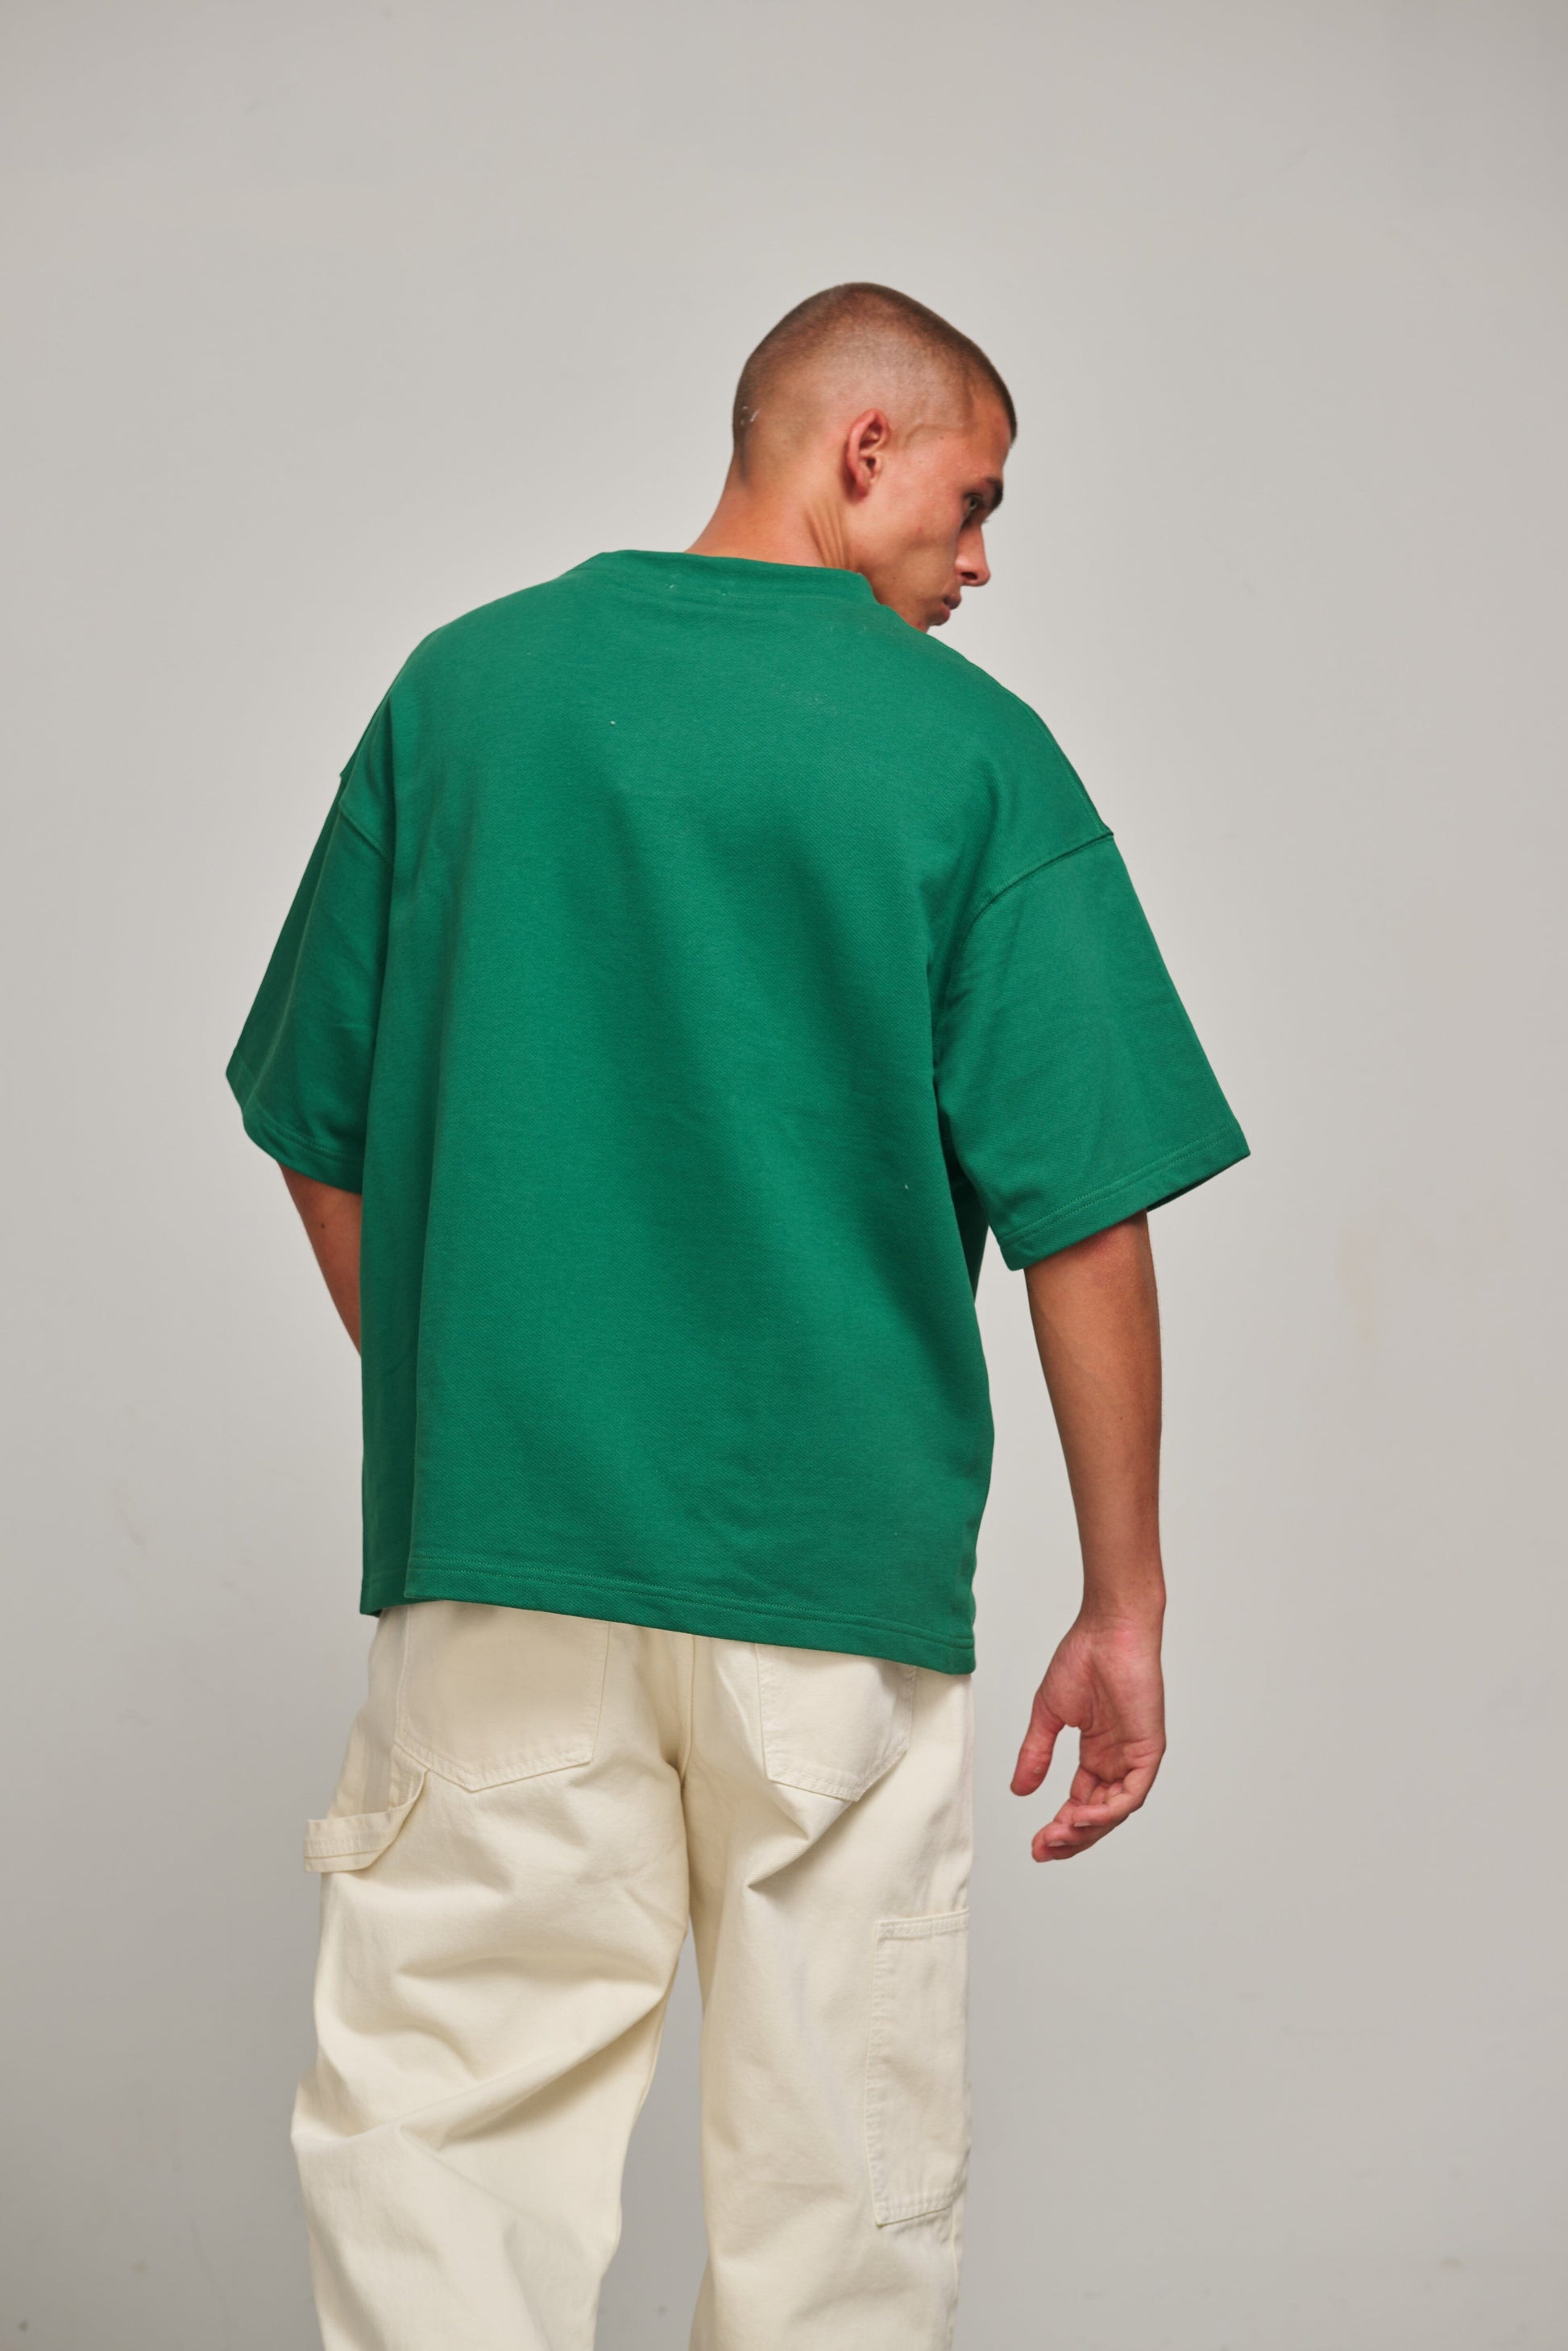 Grünes oversize T-Shirt für Männer